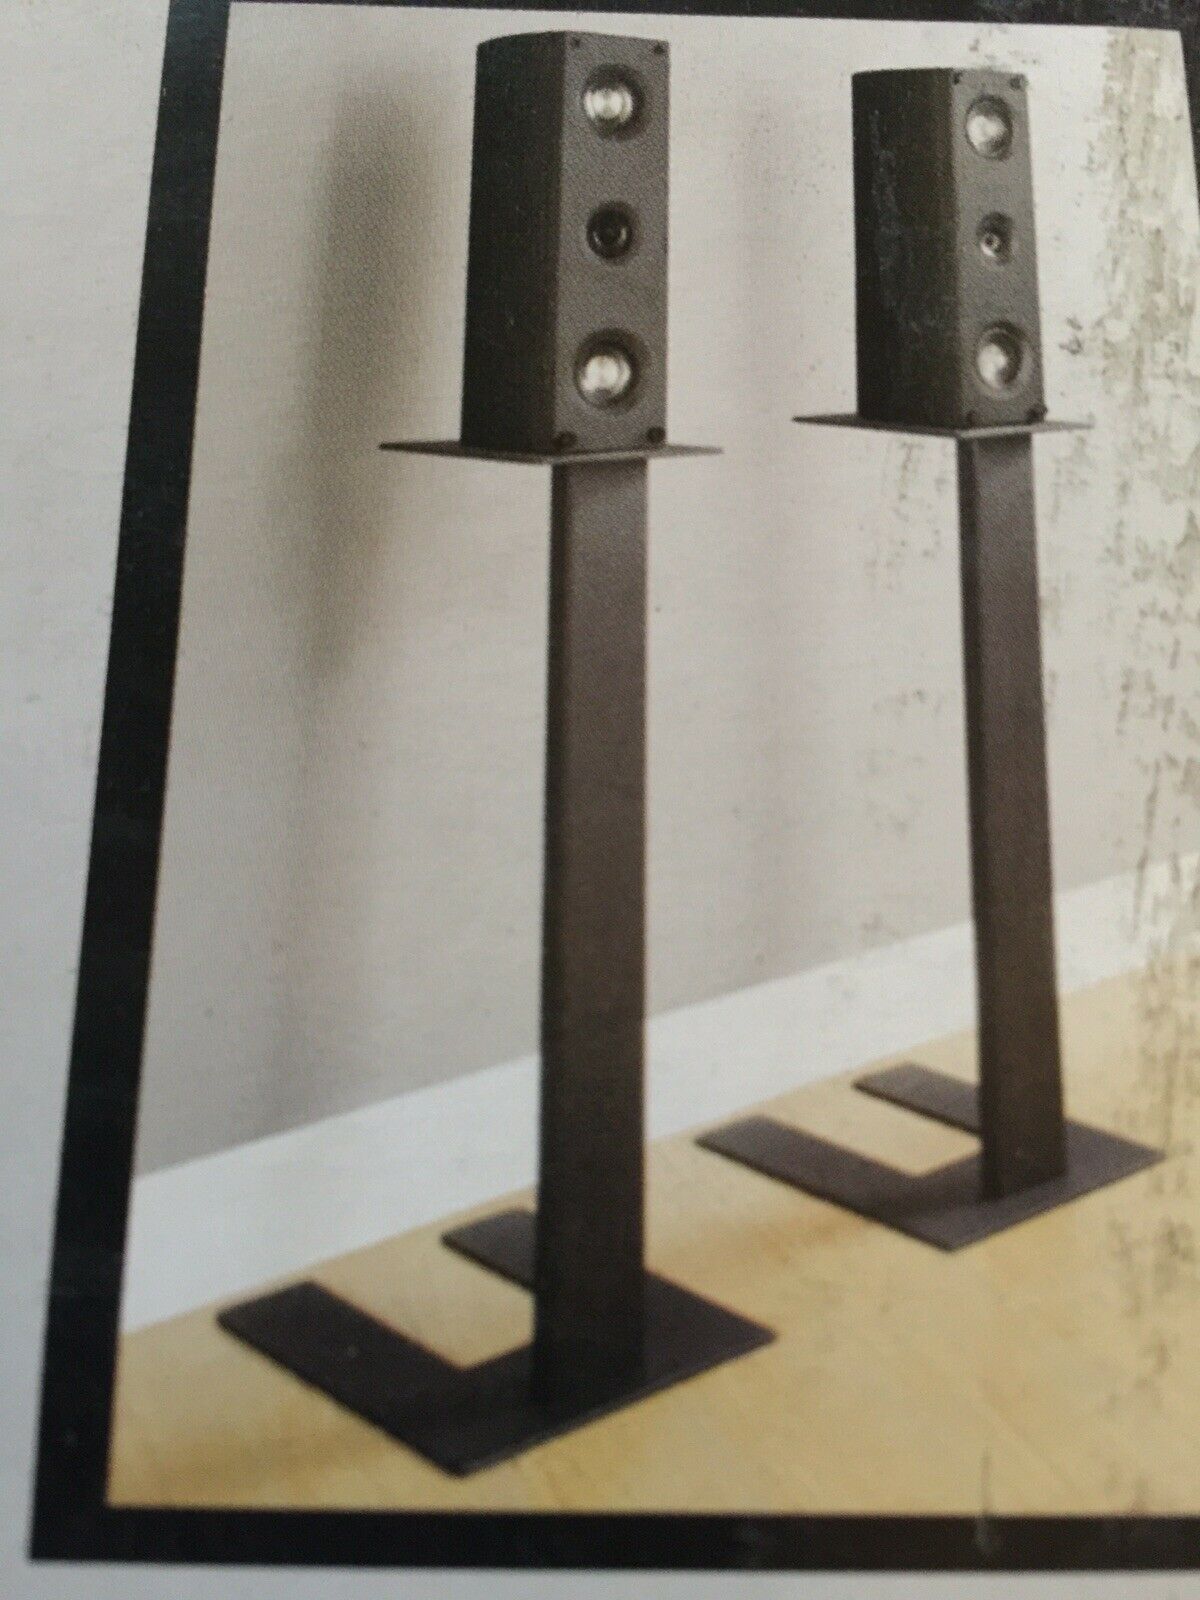 Speaker Stands Studio Monitors 28” New In Box Vintage Audio Stereo Black Steel